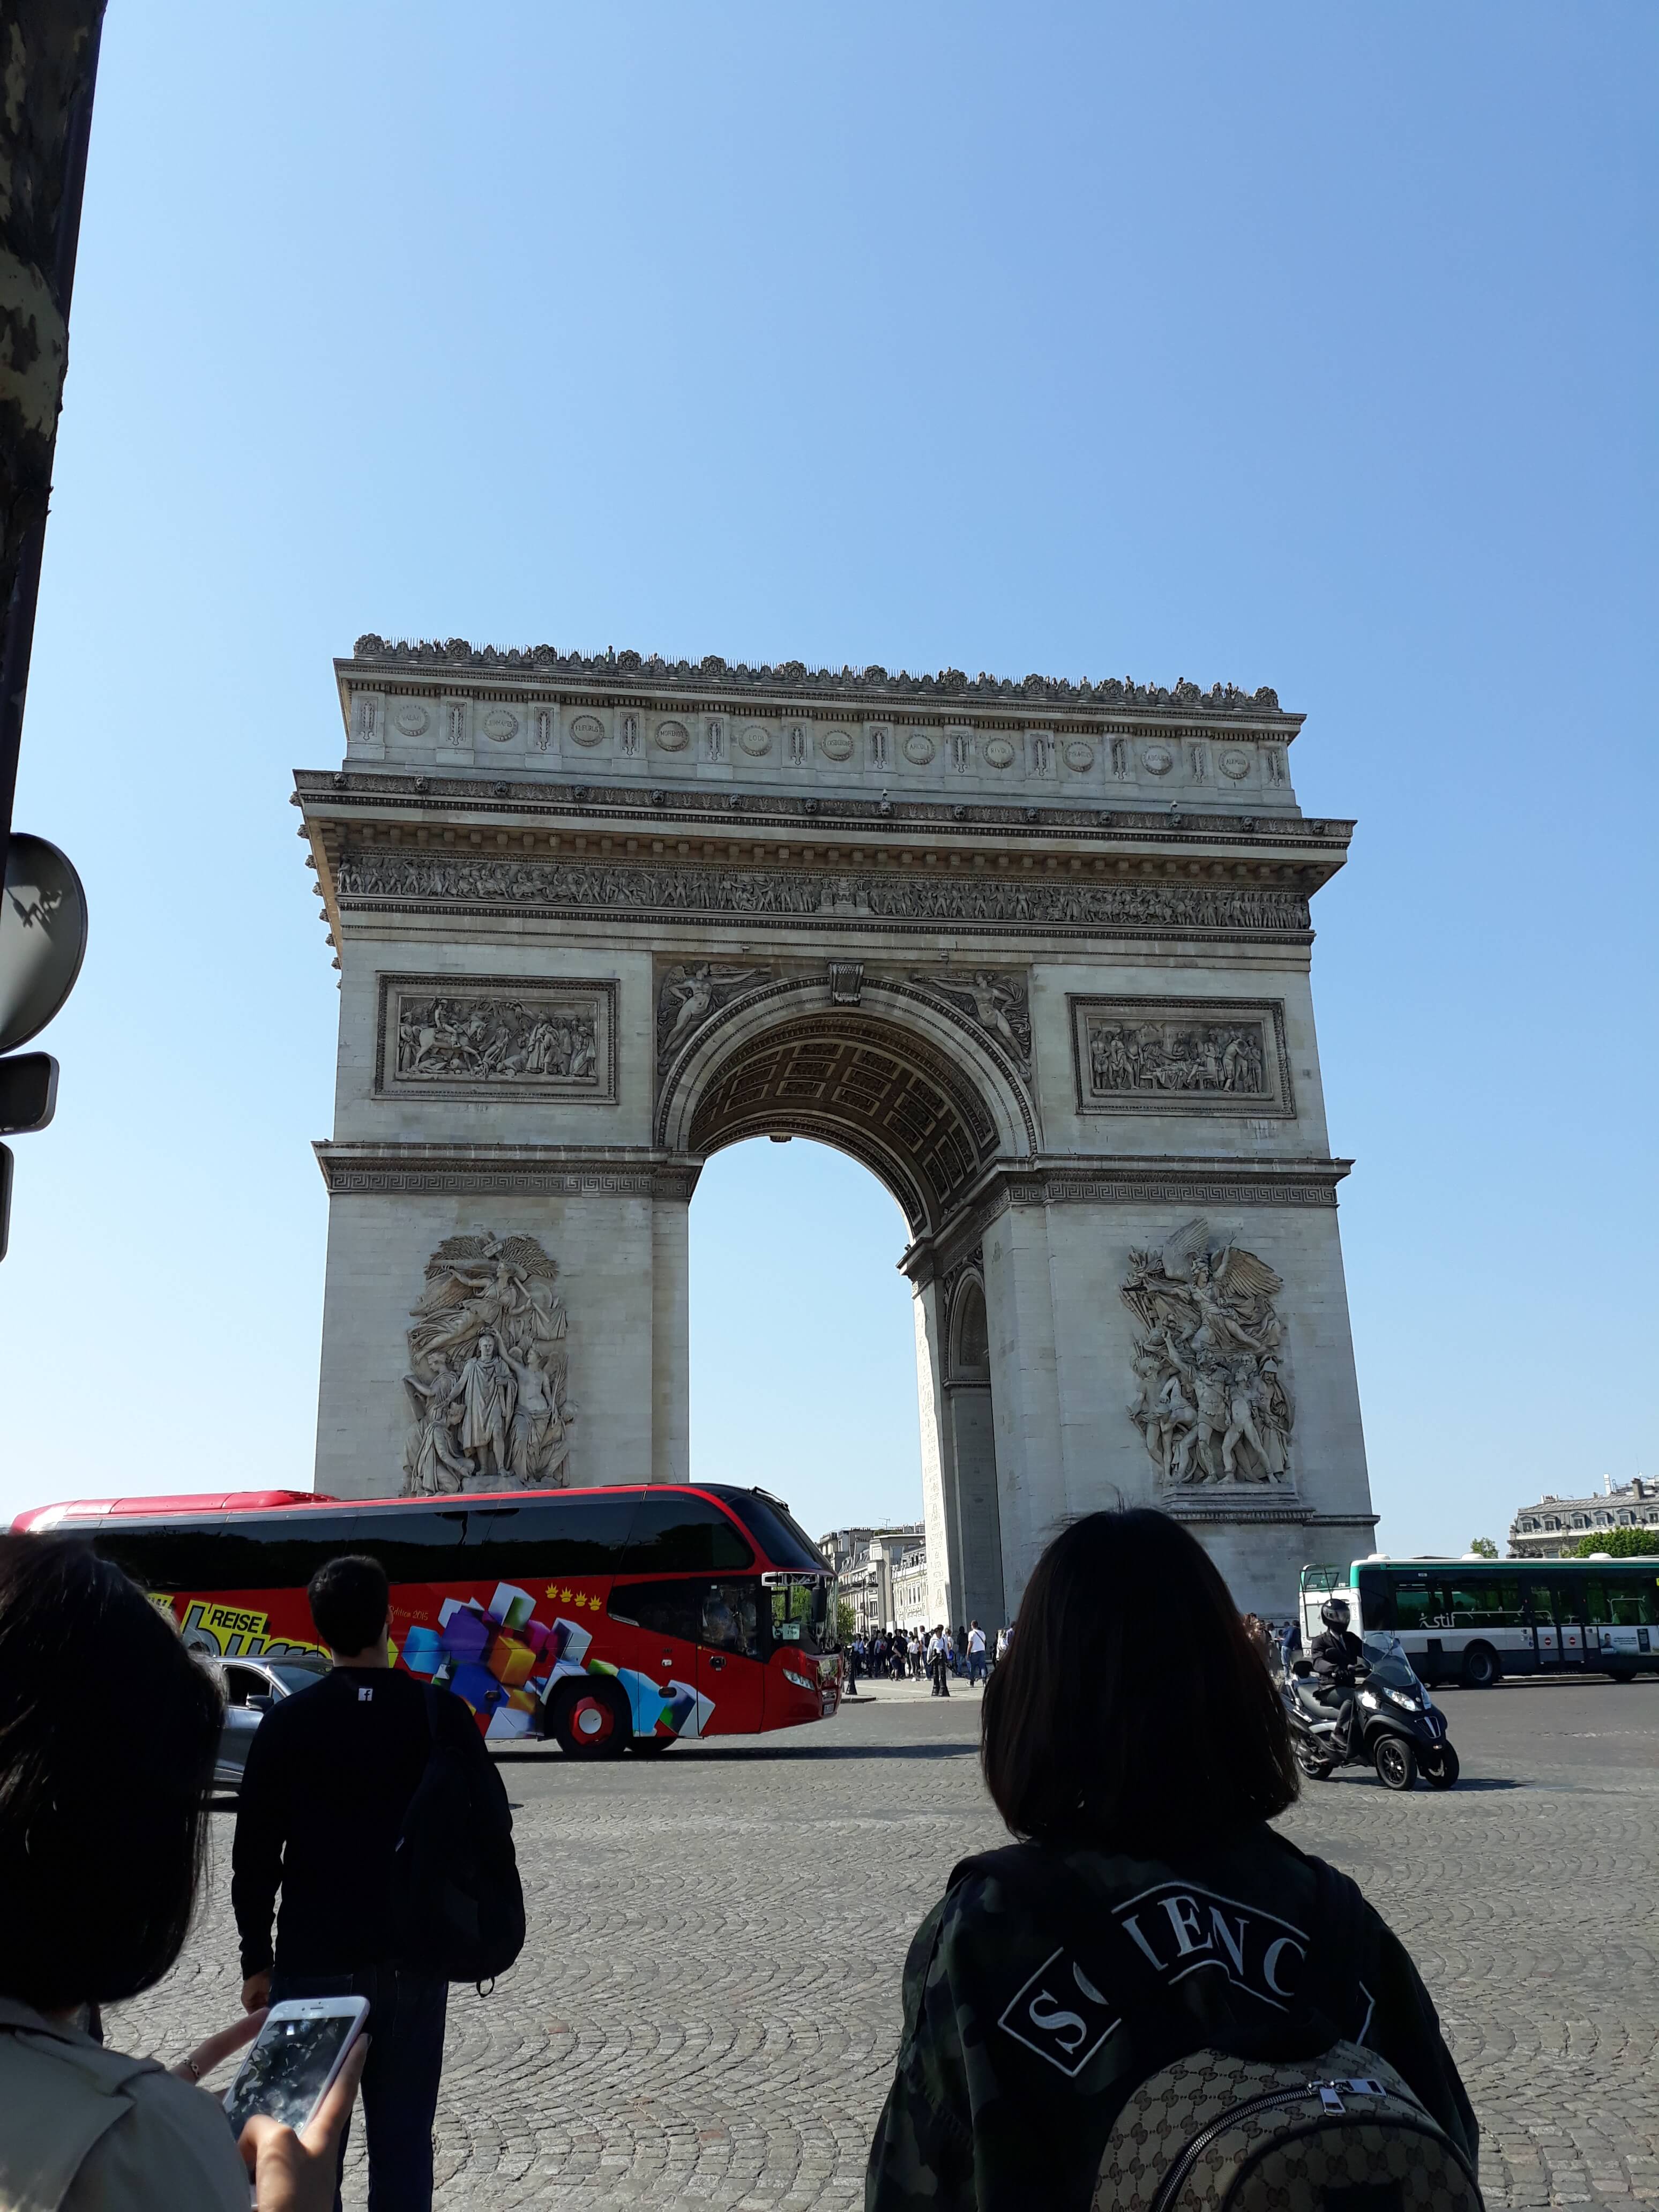 Mitten in Paris: L'arc de triomphe